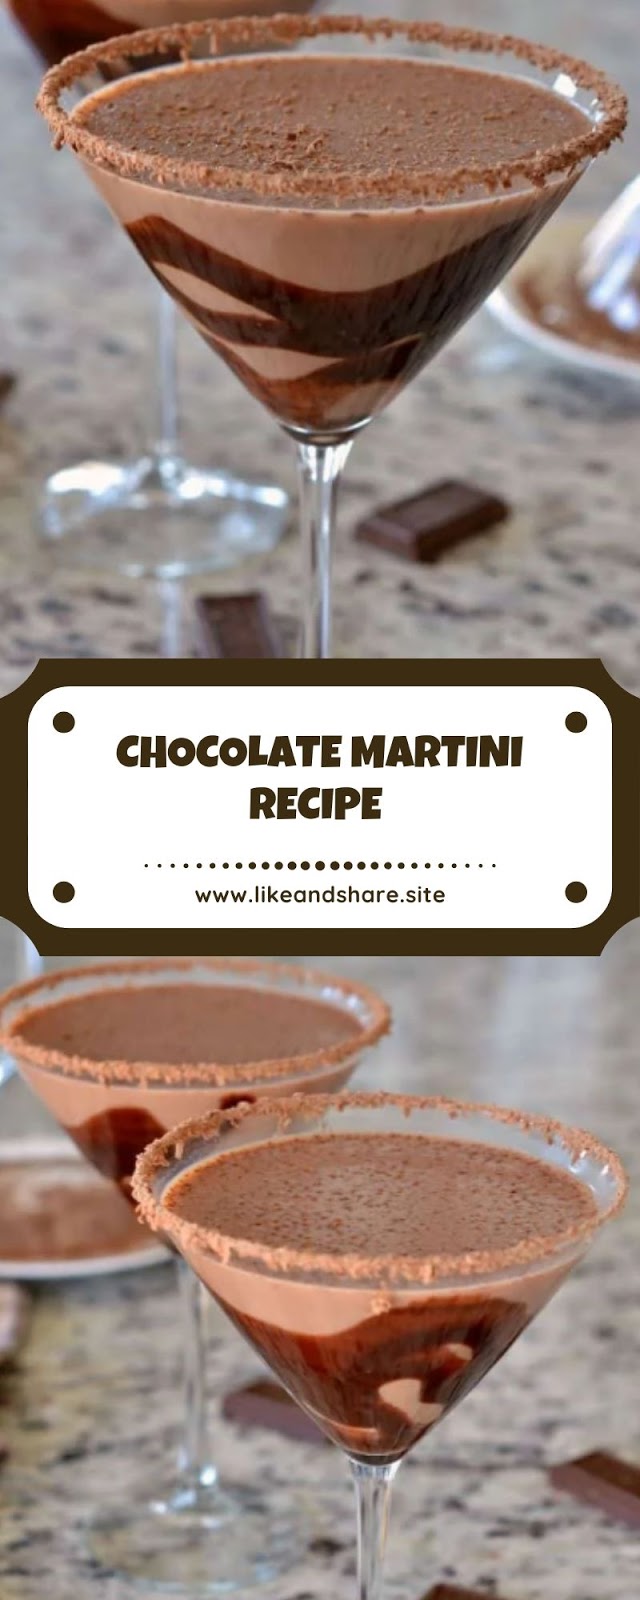 CHOCOLATE MARTINI RECIPE 